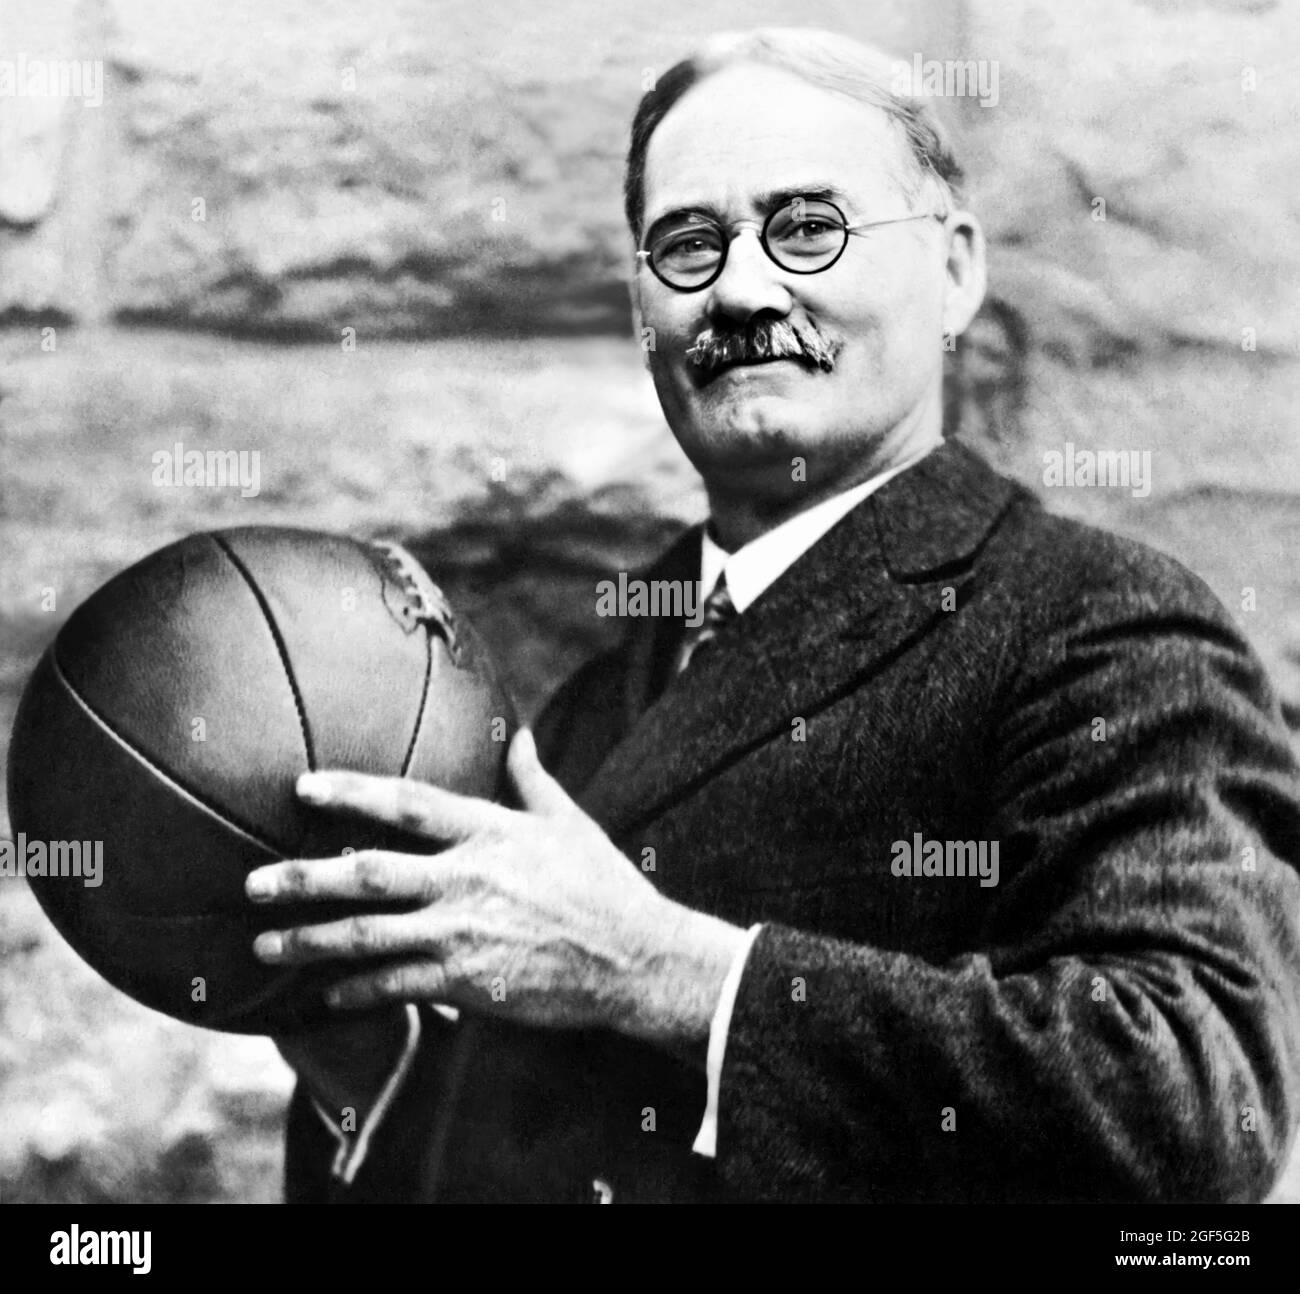 1930 ca , USA : The american Doctor JAMES A. NAISMITH ( 1861 - 1939 ), born-canadian, inventor of BASKETBALL sport . he wrote the original basketball rule book and founded the University of Kansas basketballs program . Unknown photographer . - BASKET - JIM THE DOC - SPORT  -  PALLACANESTRO - INVENTORE - INVENZIONE - INVENTION - DISCIPLINA SPORTIVA - Dottore - HISTORY - FOTO STORICHE - PORTRAIT - RITRATTO - prato - grass - meadow - palla - ball - cravatta - tie - occhiali da vista - lens ----  Archivio GBB Stock Photo